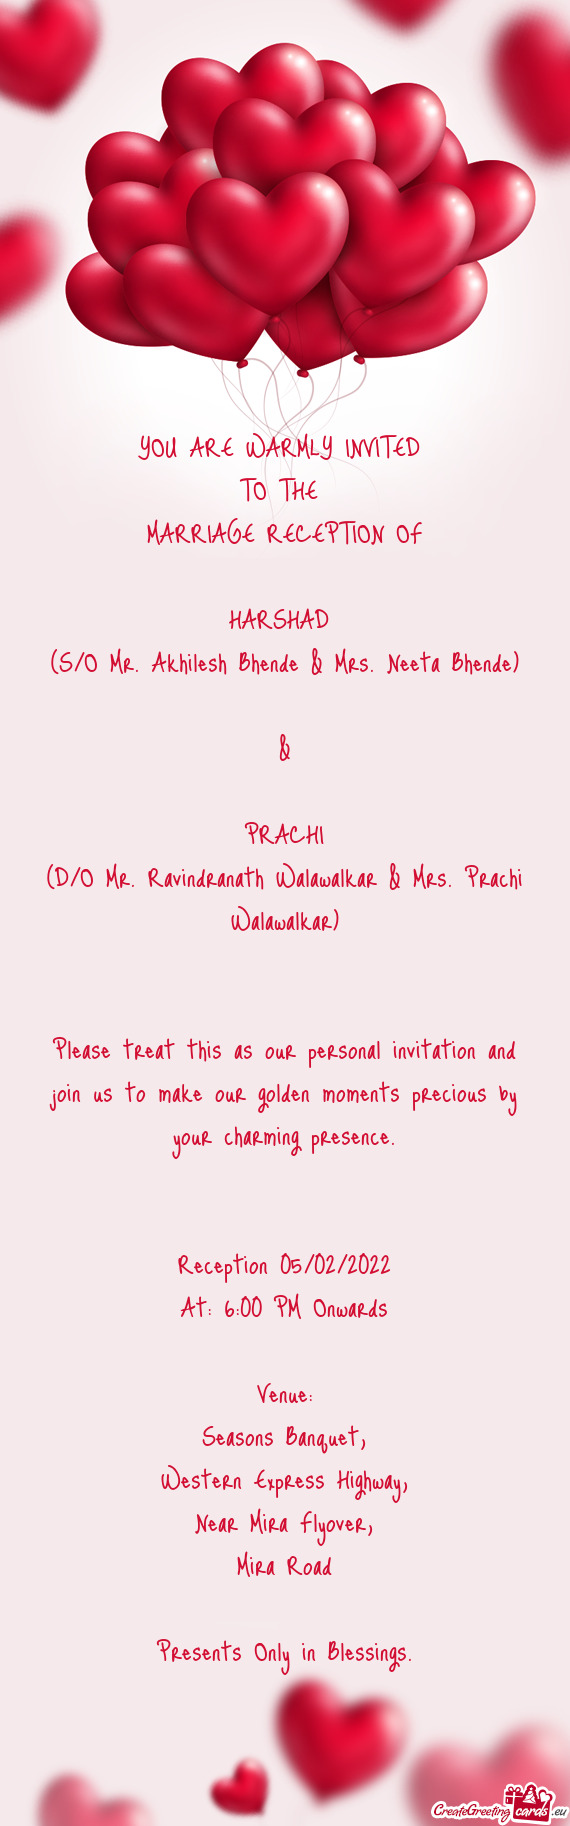 (D/O Mr. Ravindranath Walawalkar & Mrs. Prachi Walawalkar)